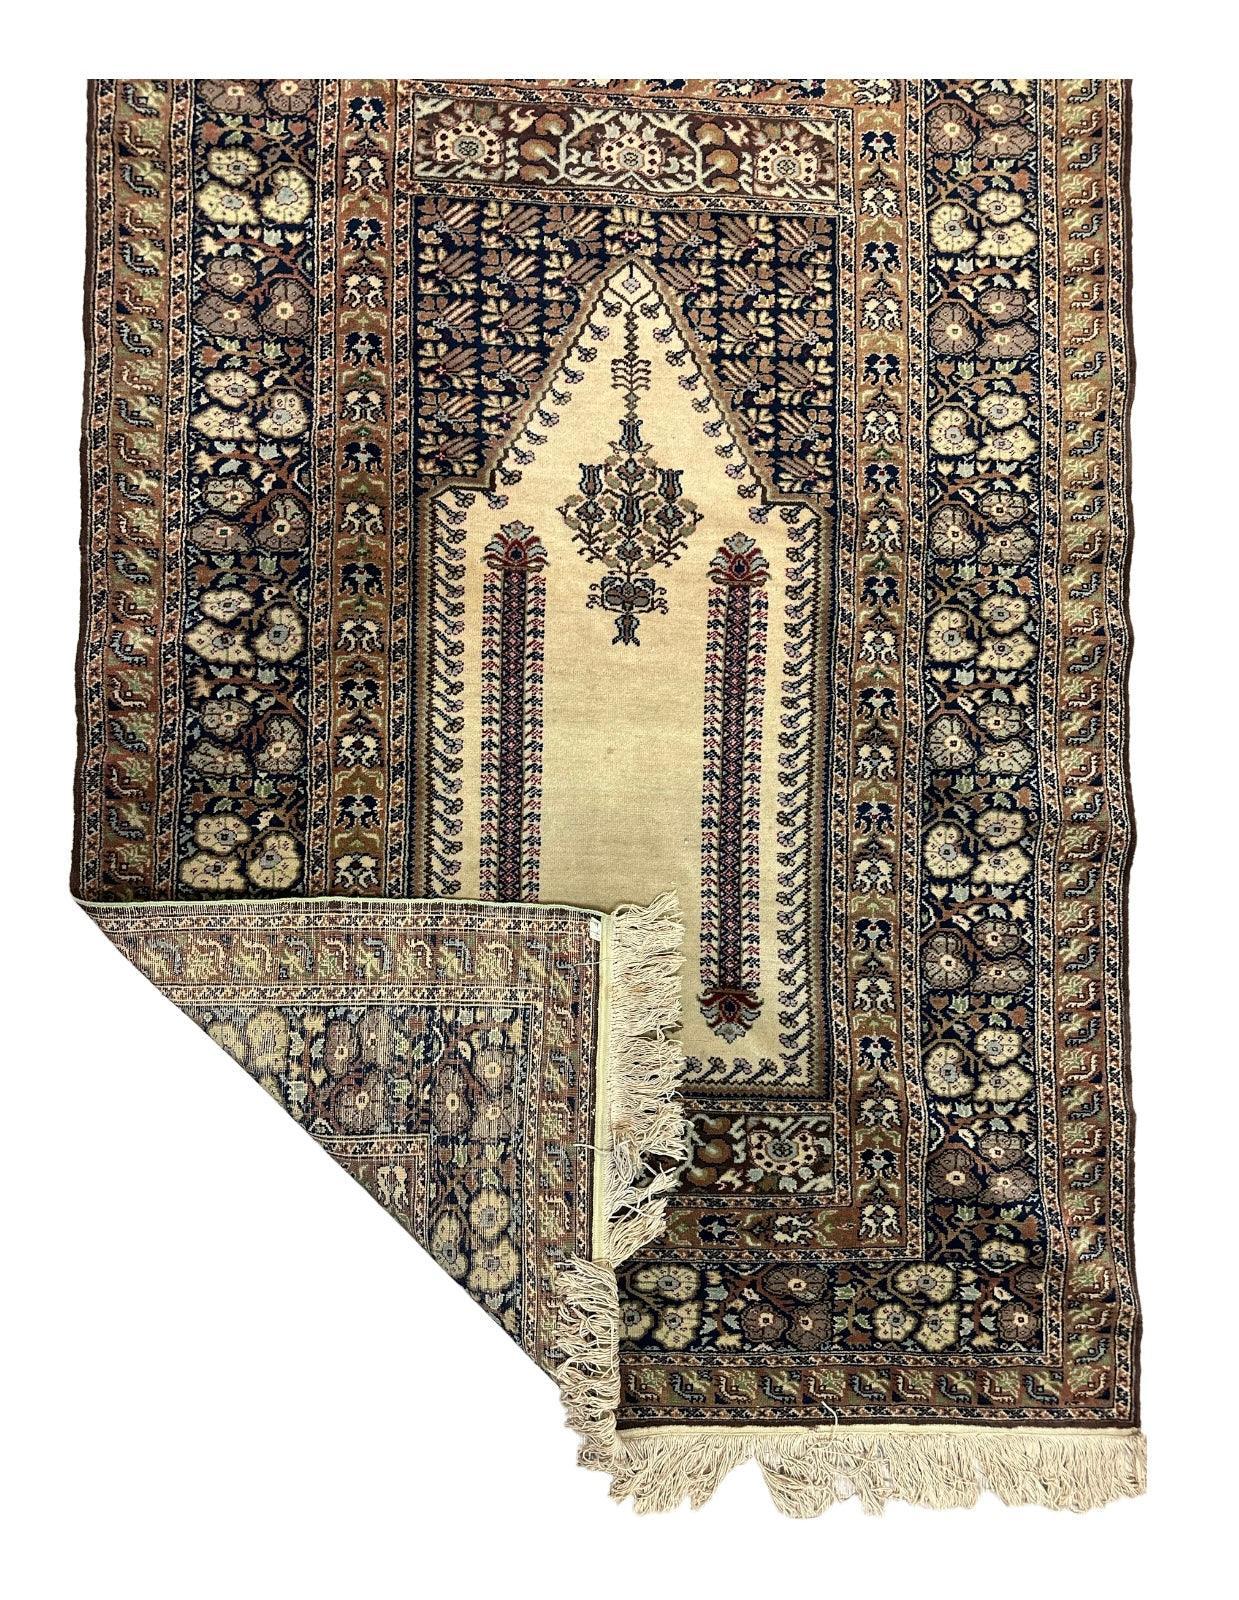 Old Panderma Rug Anatolia, Turkey, Early 20th Century, Very Good Condition 4’ x 6’